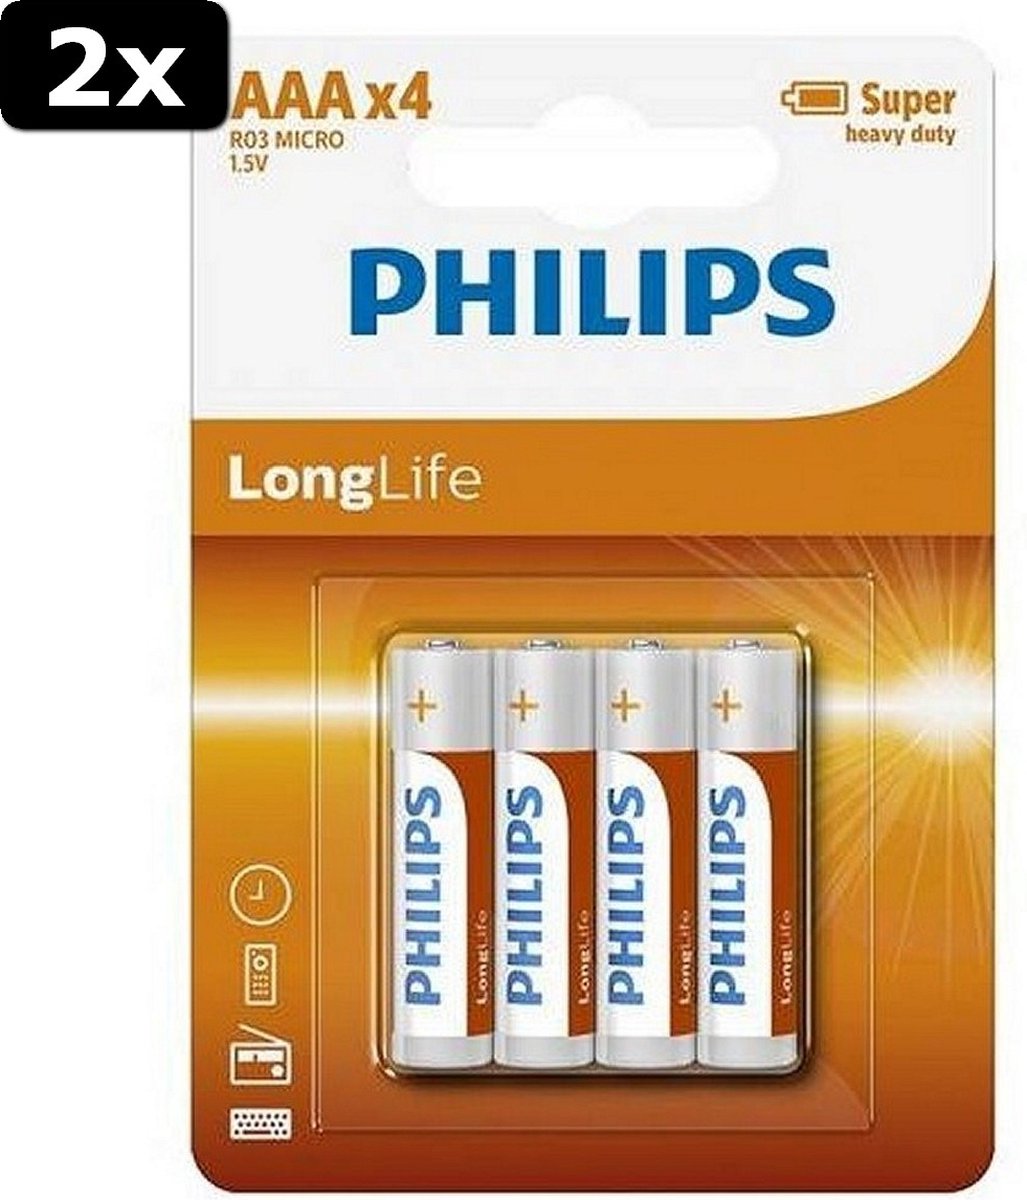 2x Piles AAA longue durée Philips R03 4 pièces | bol.com